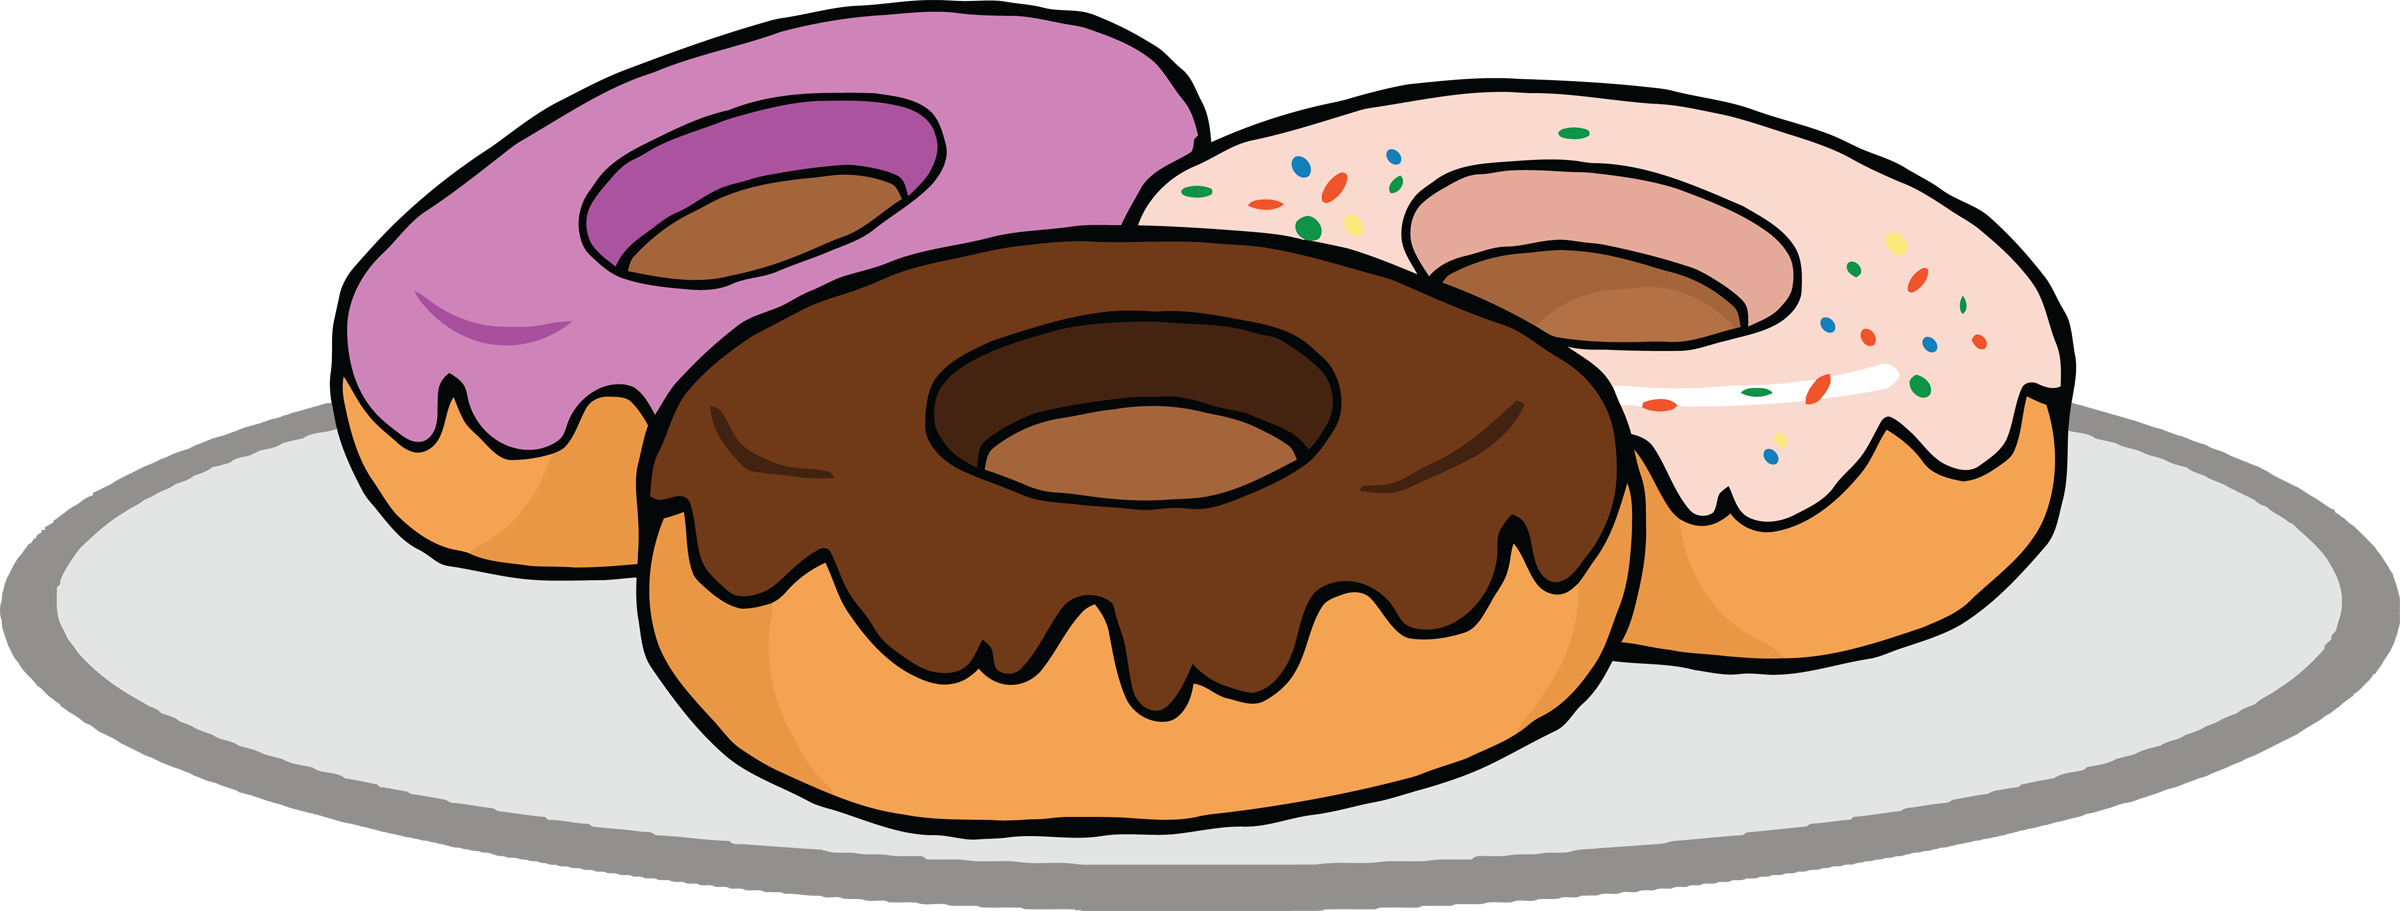 Donut Clipart & Donut Clip Art Images.